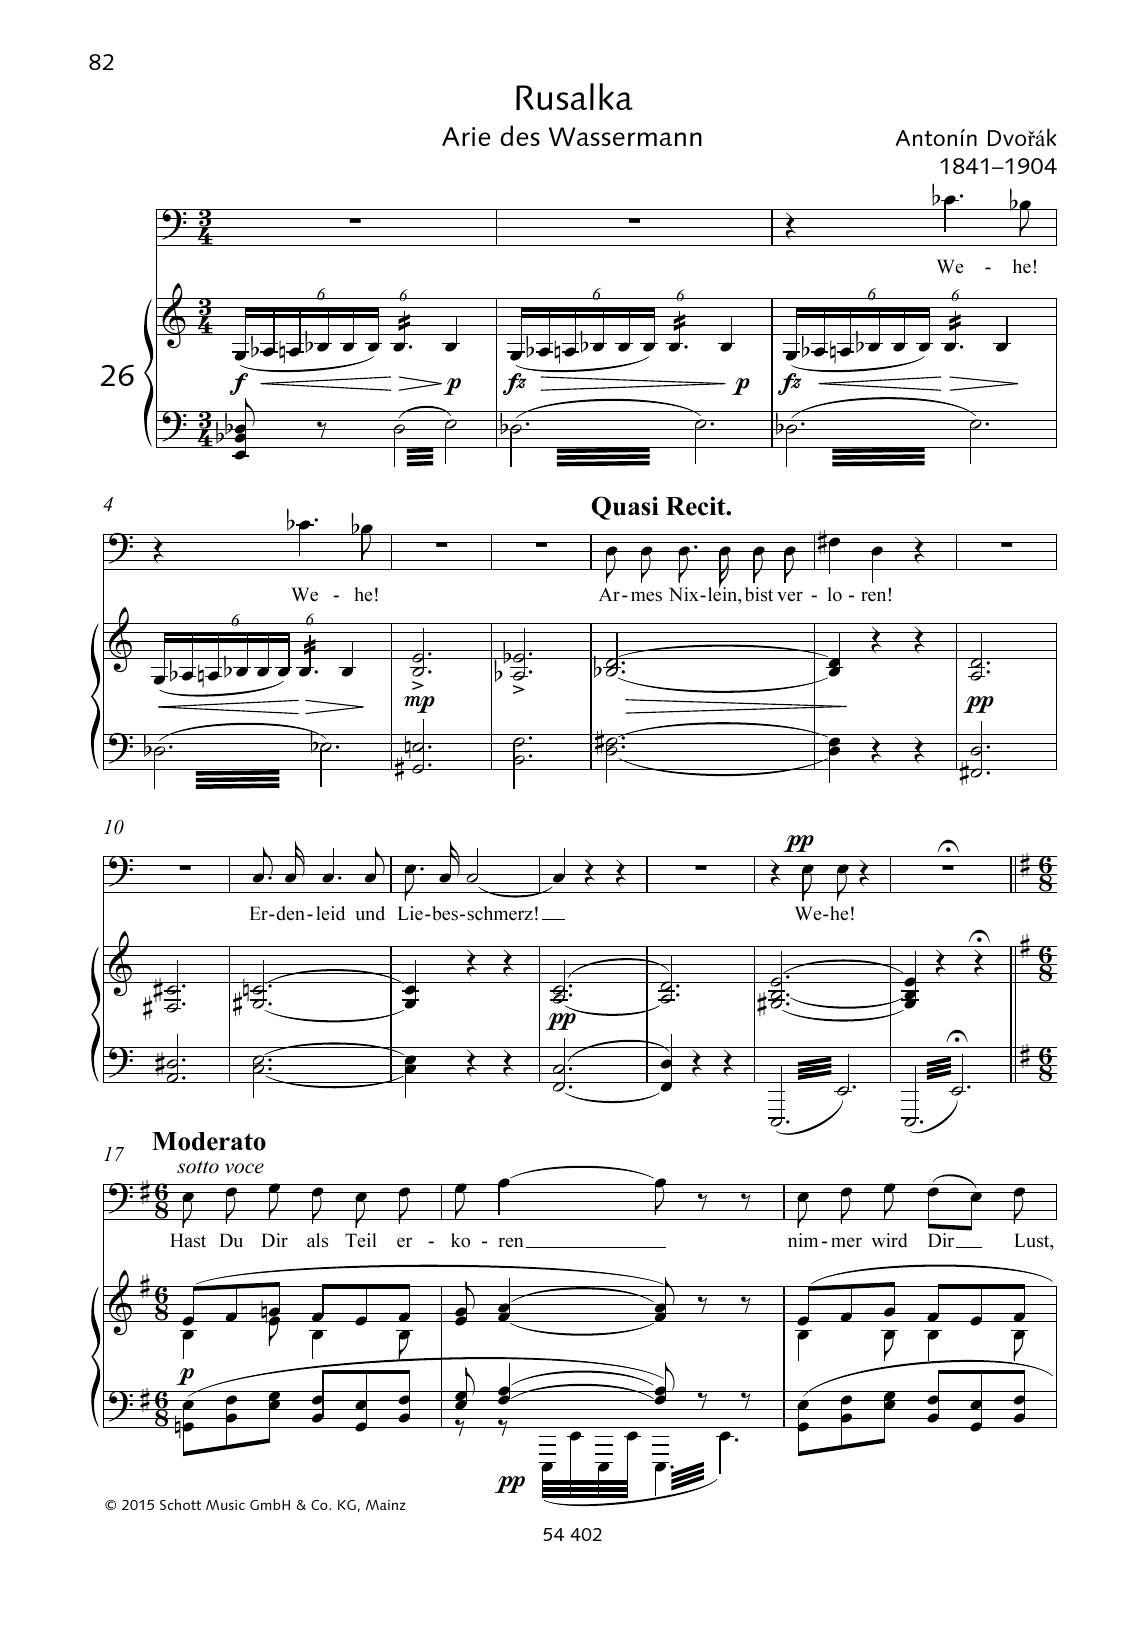 Antonín Dvorák Wehe! Wehe! Armes Nixlein, bist verloren sheet music notes and chords arranged for Piano & Vocal